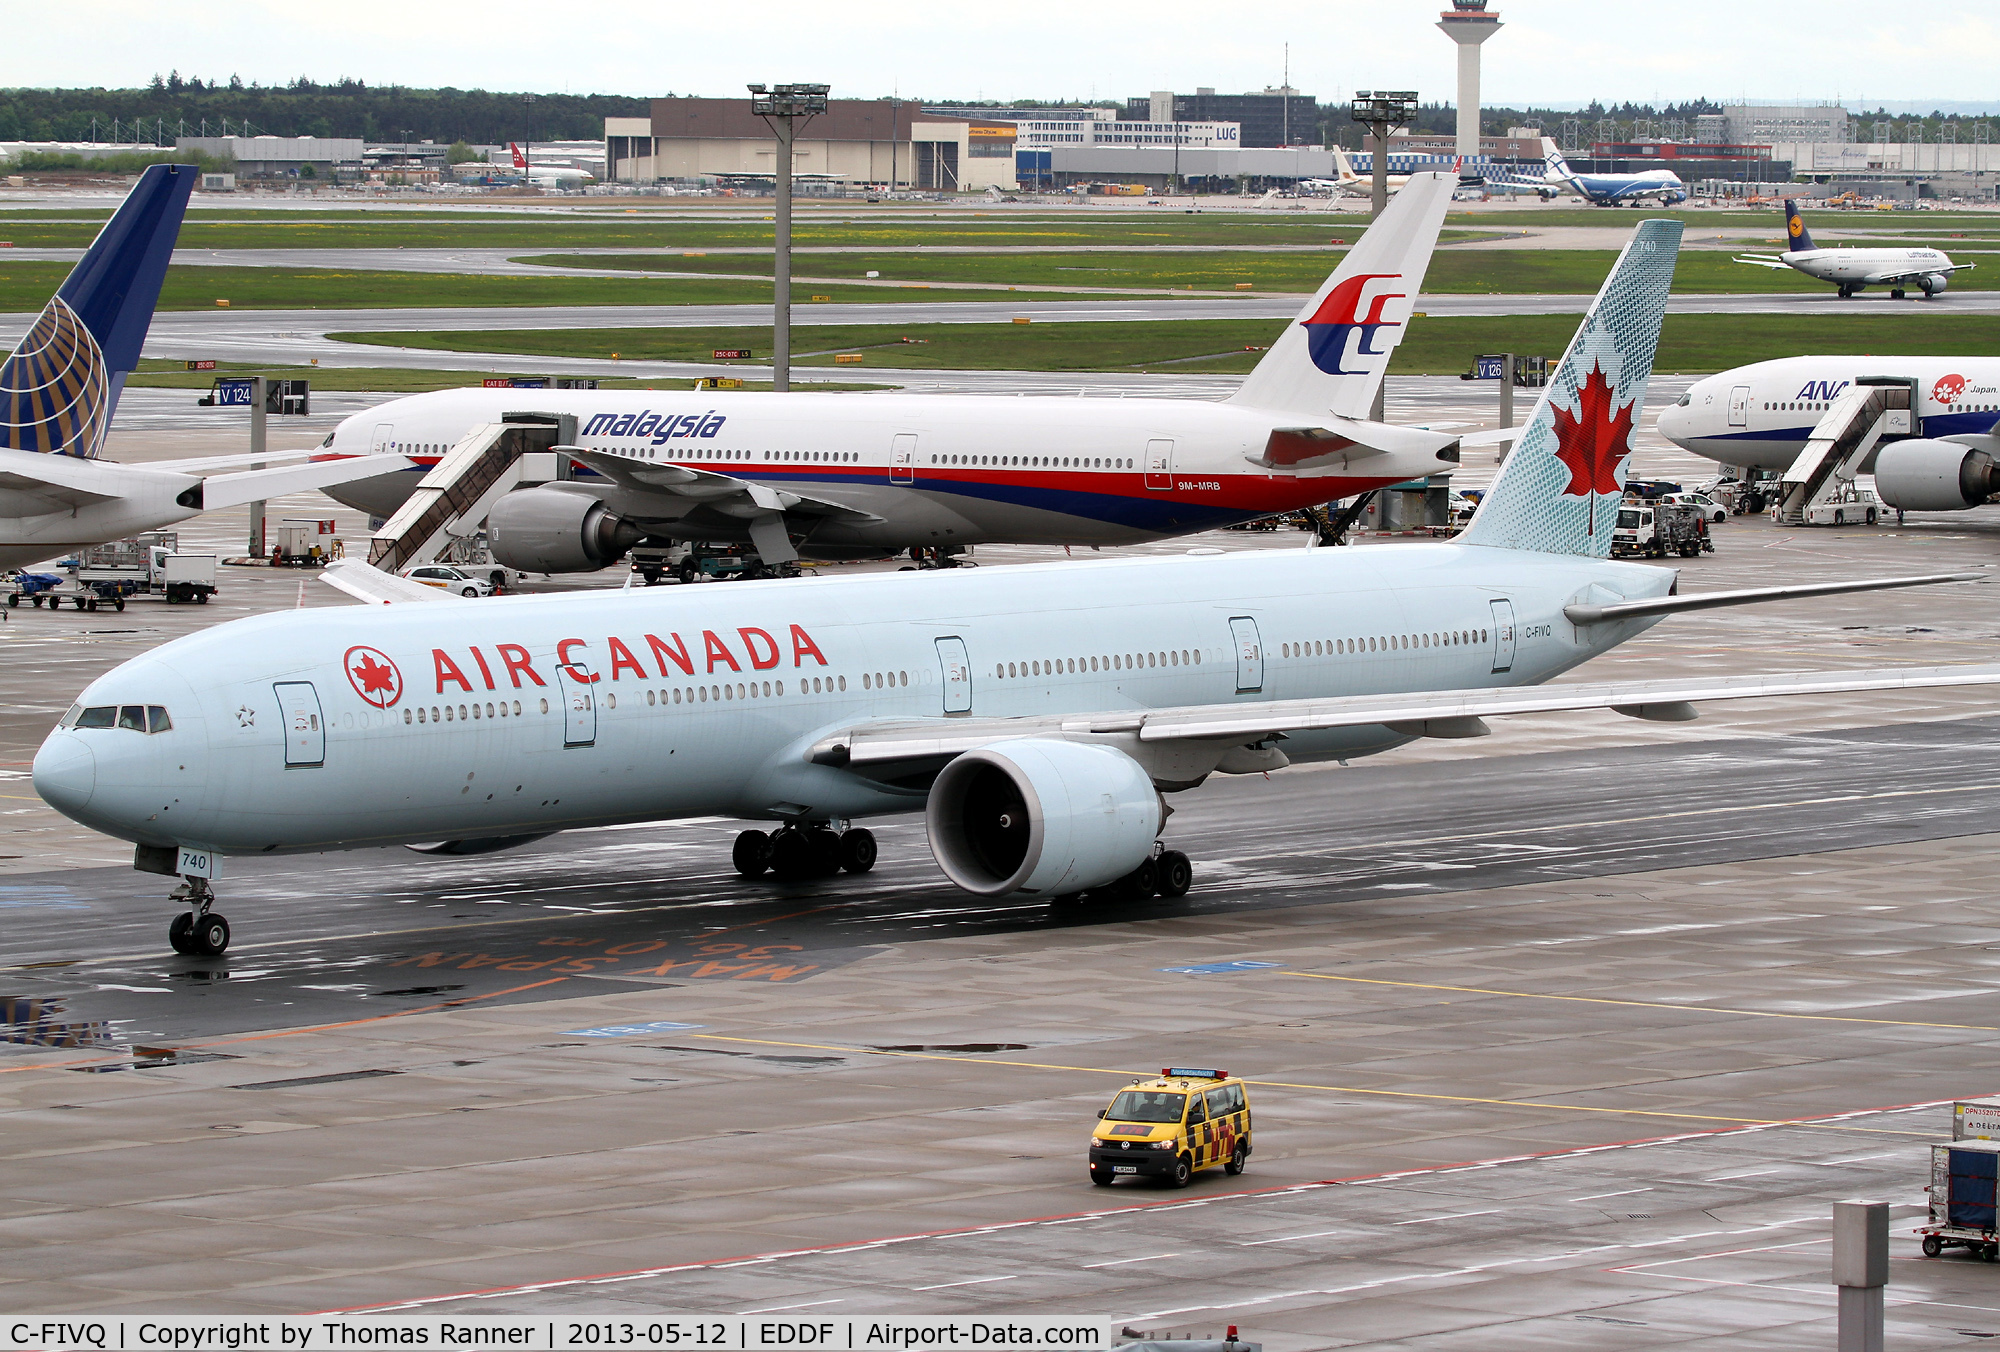 C-FIVQ, 2008 Boeing 777-333/ER C/N 35240, Air Canada B777